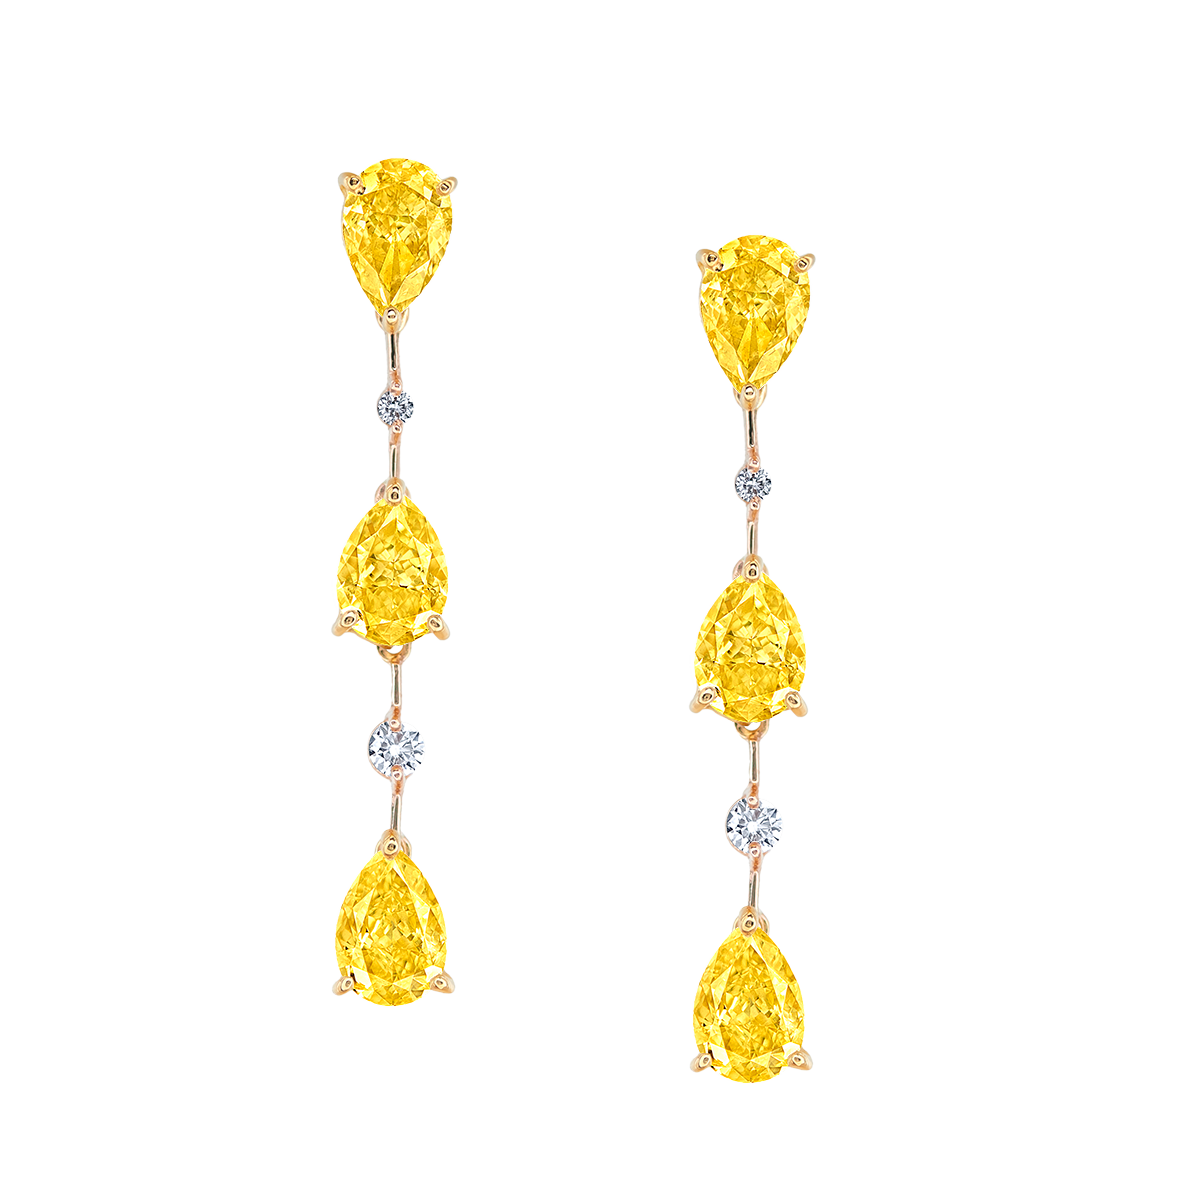 GIA 3.03克拉 濃彩黃鑽耳環
Fancy Intense Yellow Colored
Diamond Earring